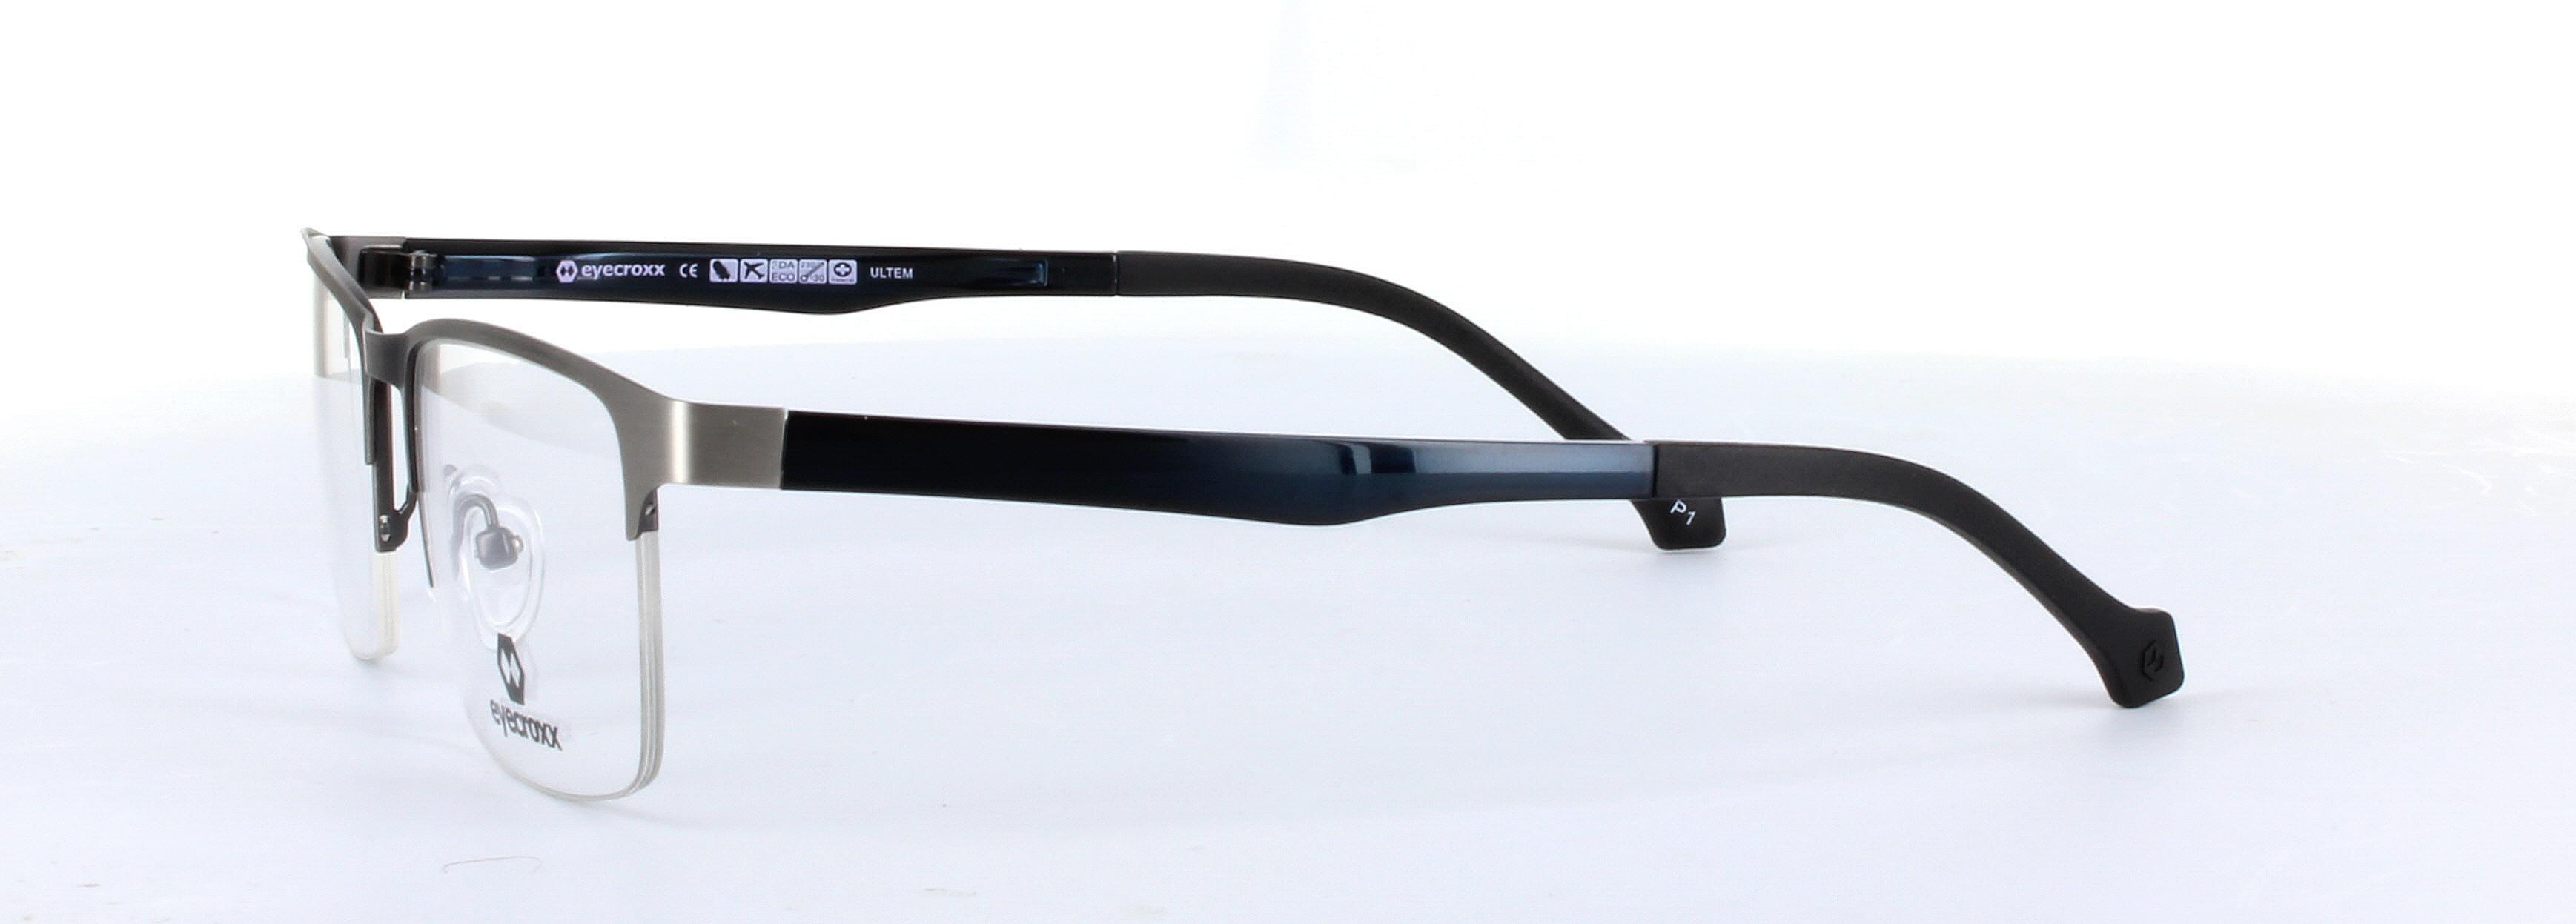 Eyecroxx 555-C4 Gunmetal Semi Rimless Metal Glasses - Image View 2